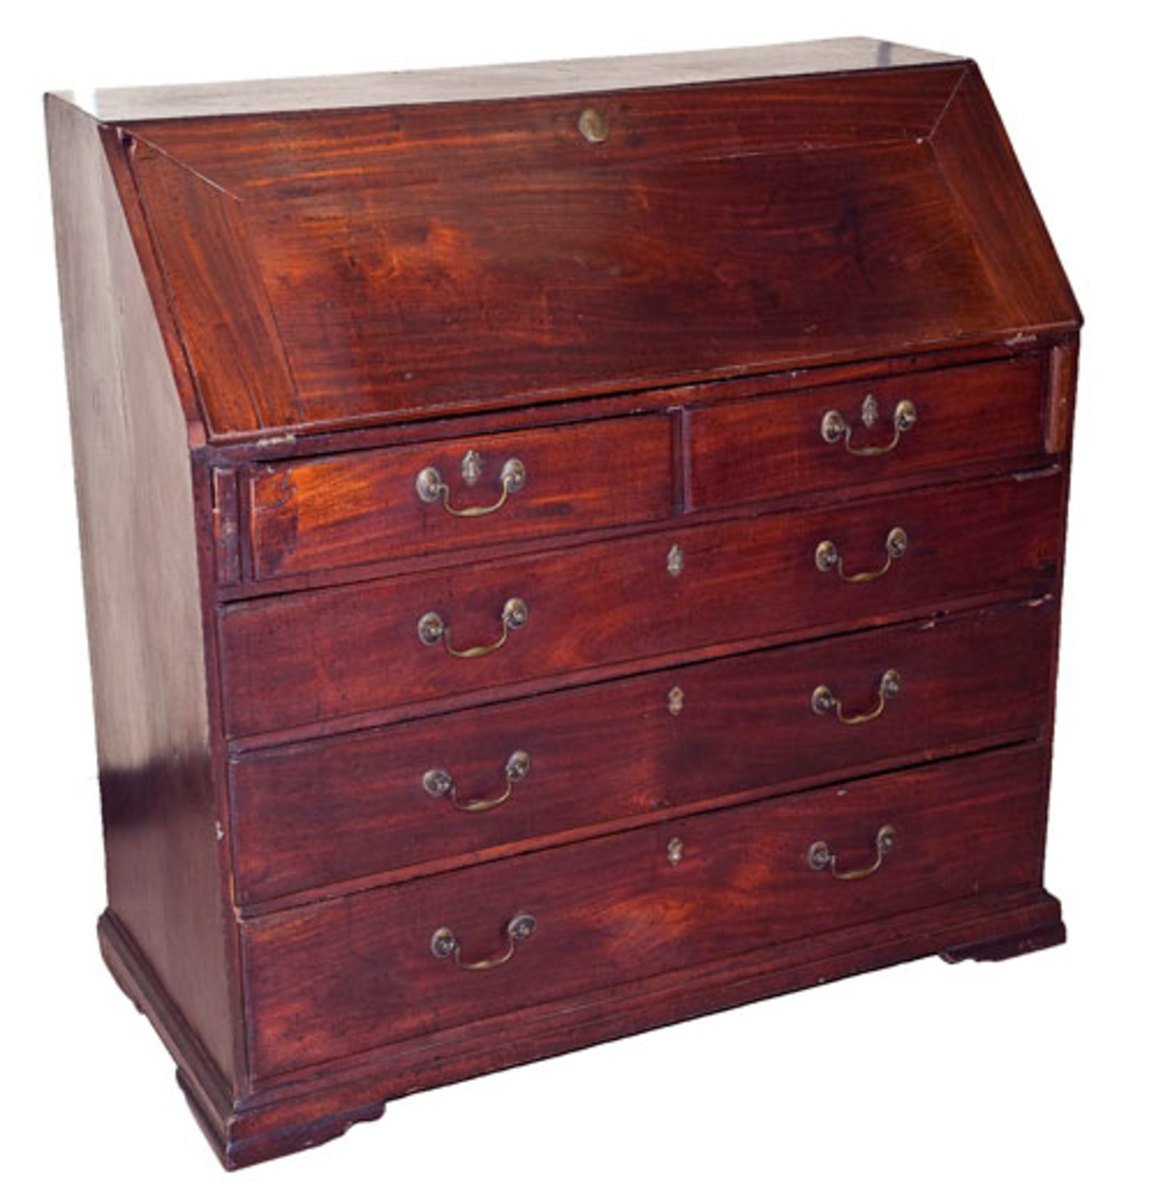 English-Slant-Top-Desk-c-1750-1780,-State-Museum-of-Harrisburg,-Pennsylvania